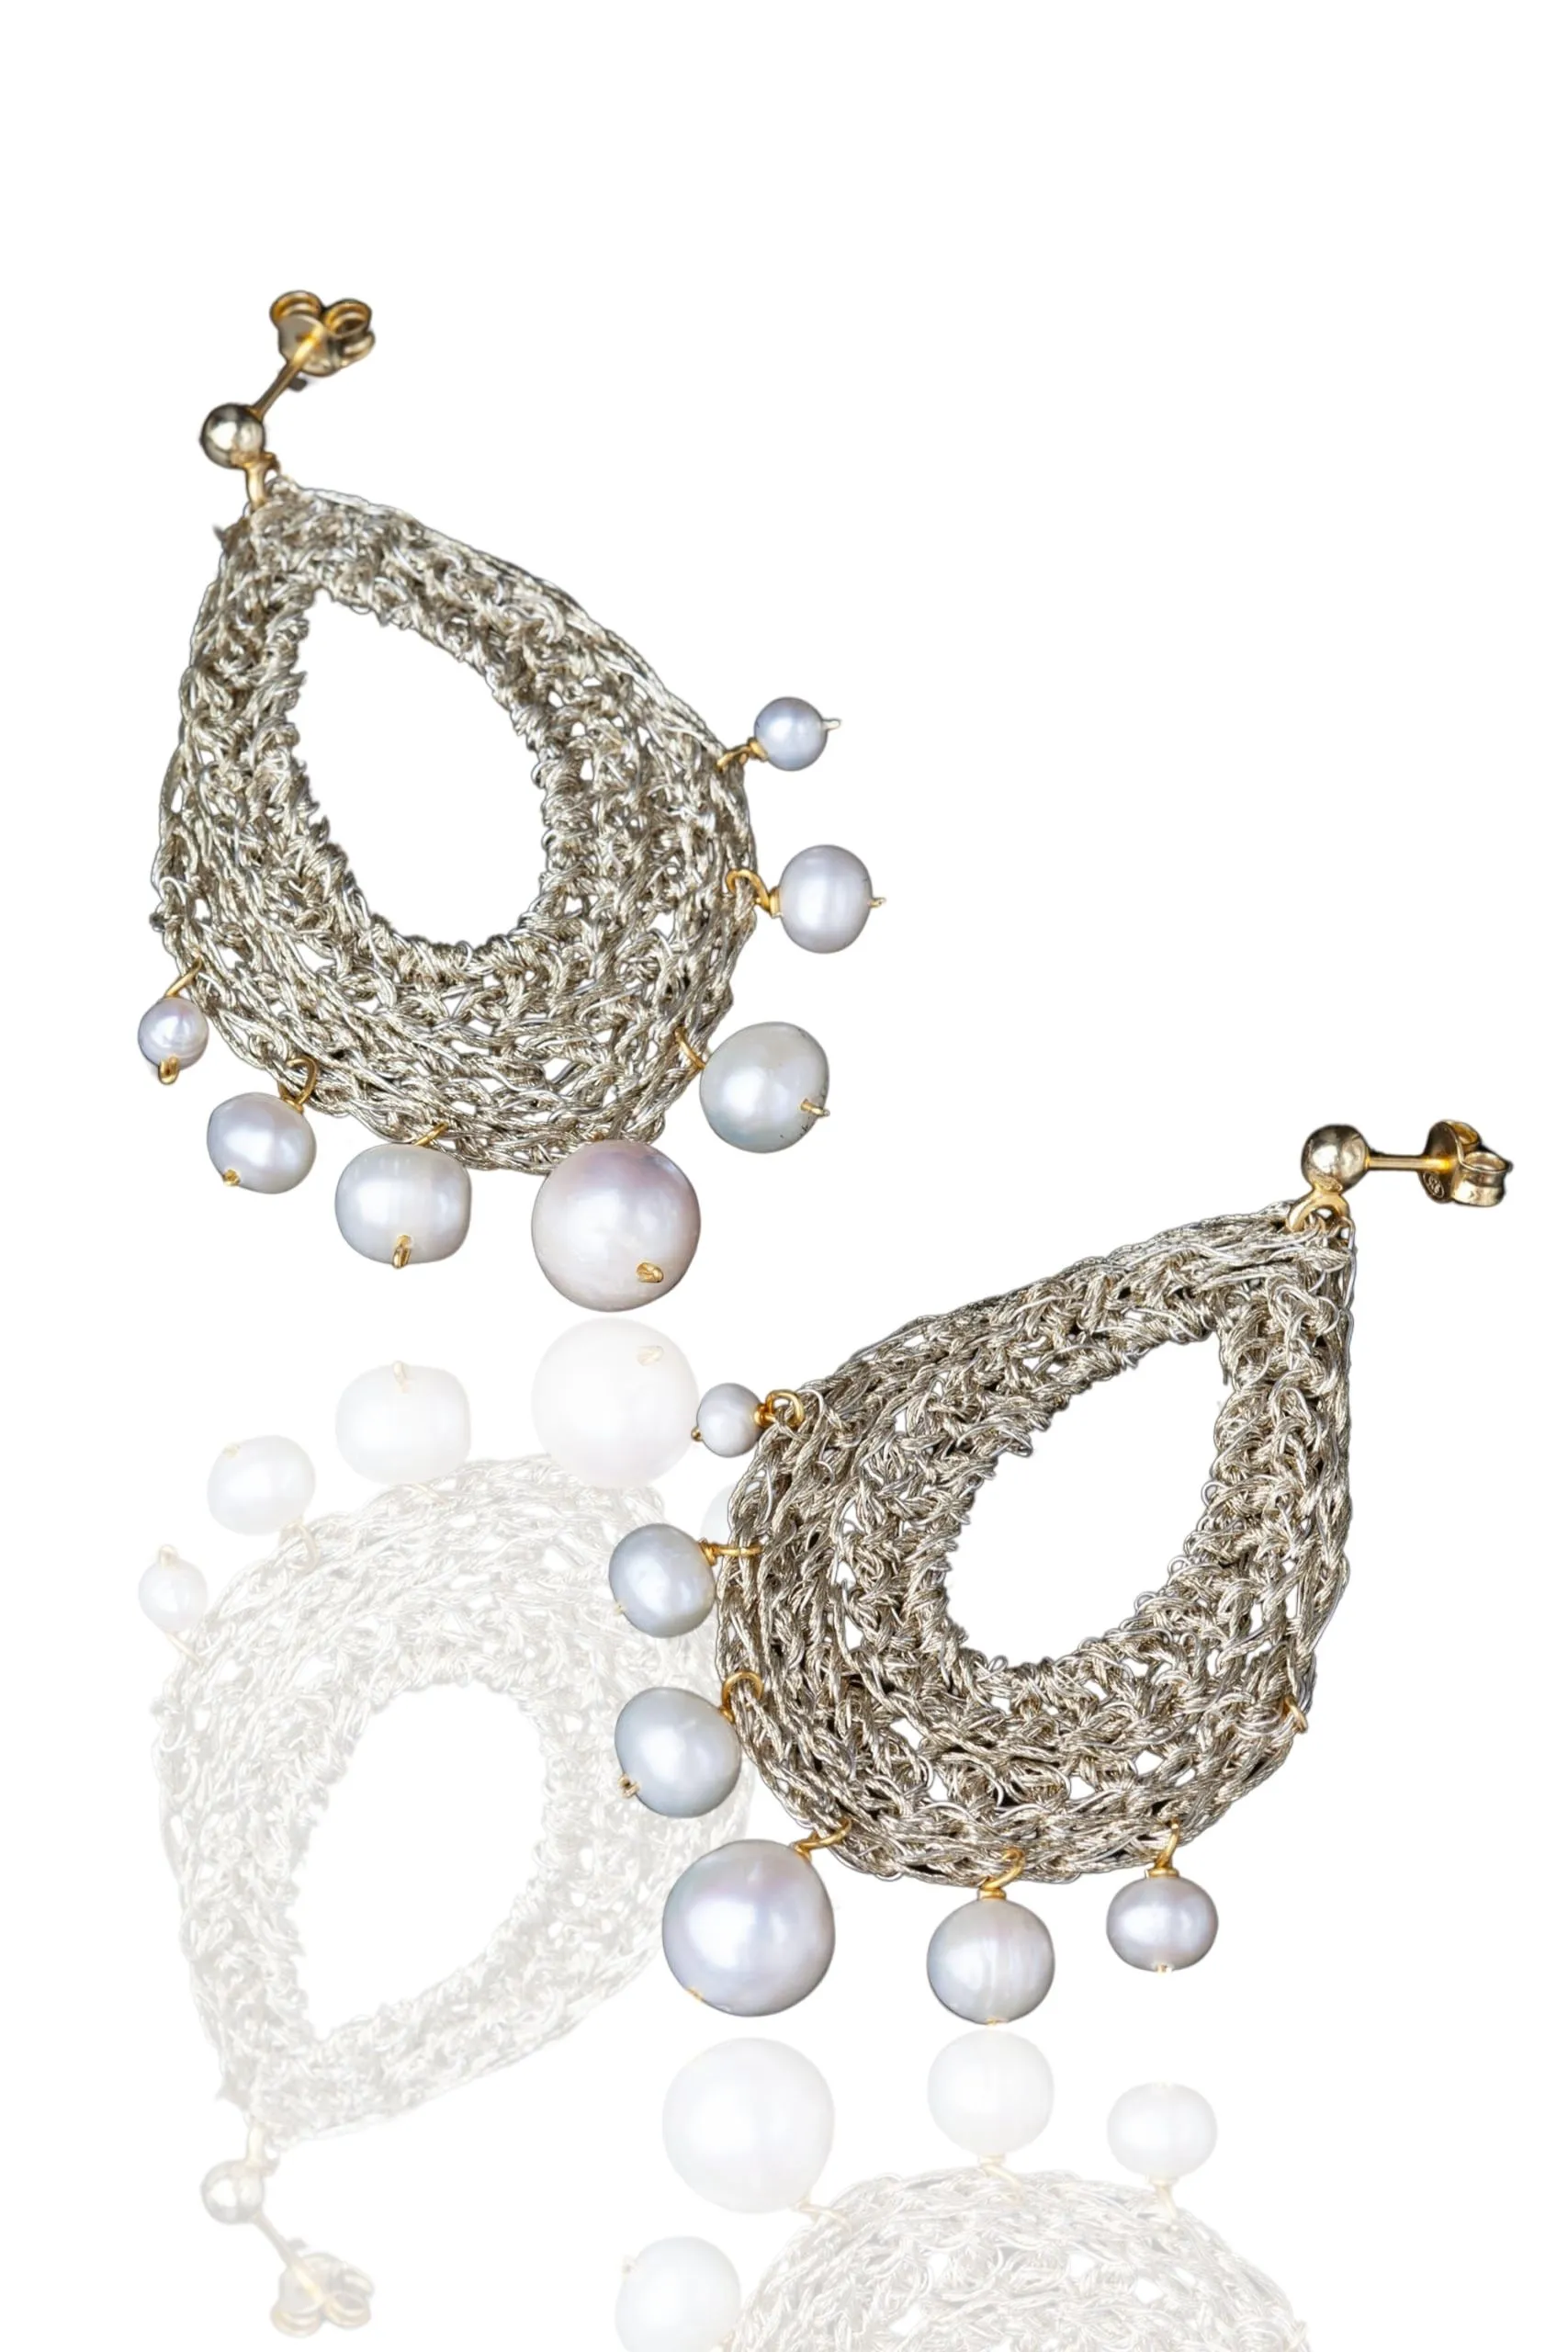 Handmade Jewellery | Teardrop crochet knit silver earrings with and pearls main